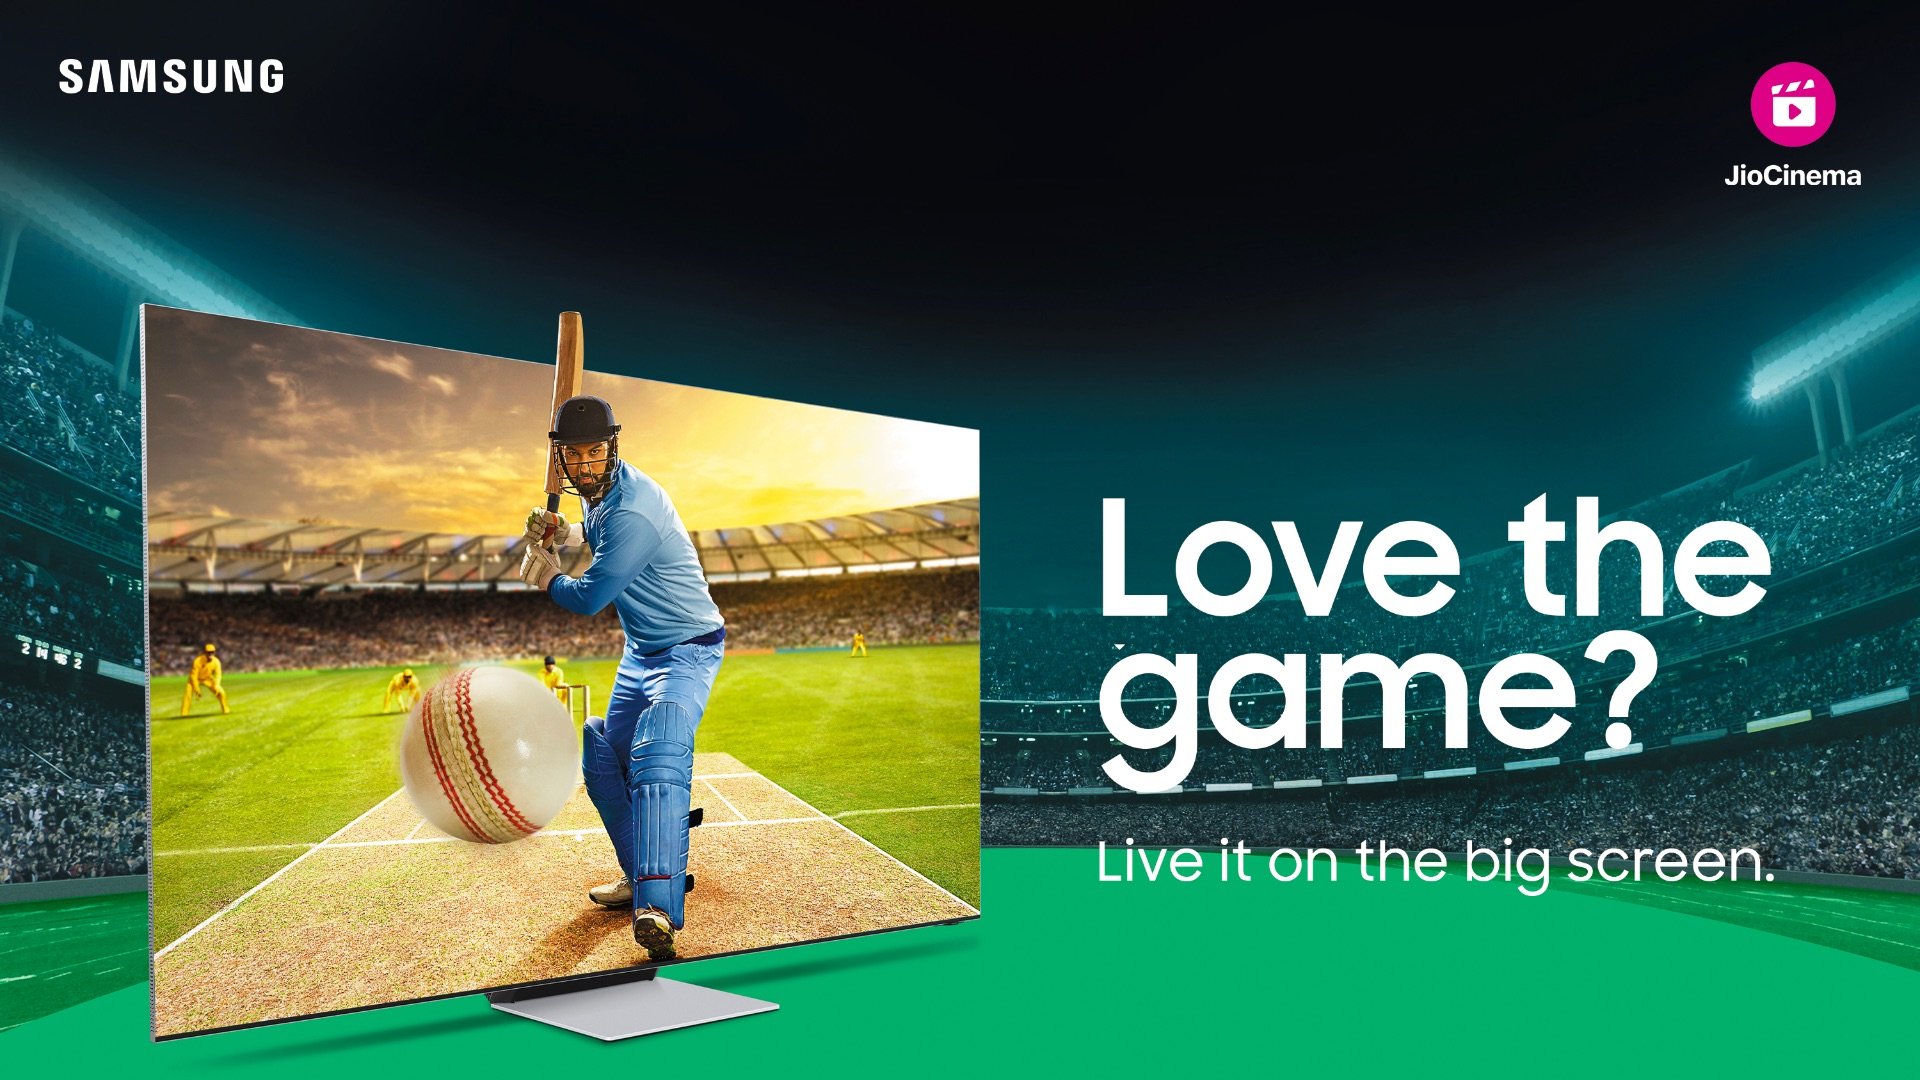 Watch IPL 2023 for Free on Jio Cinema app Live Streaming